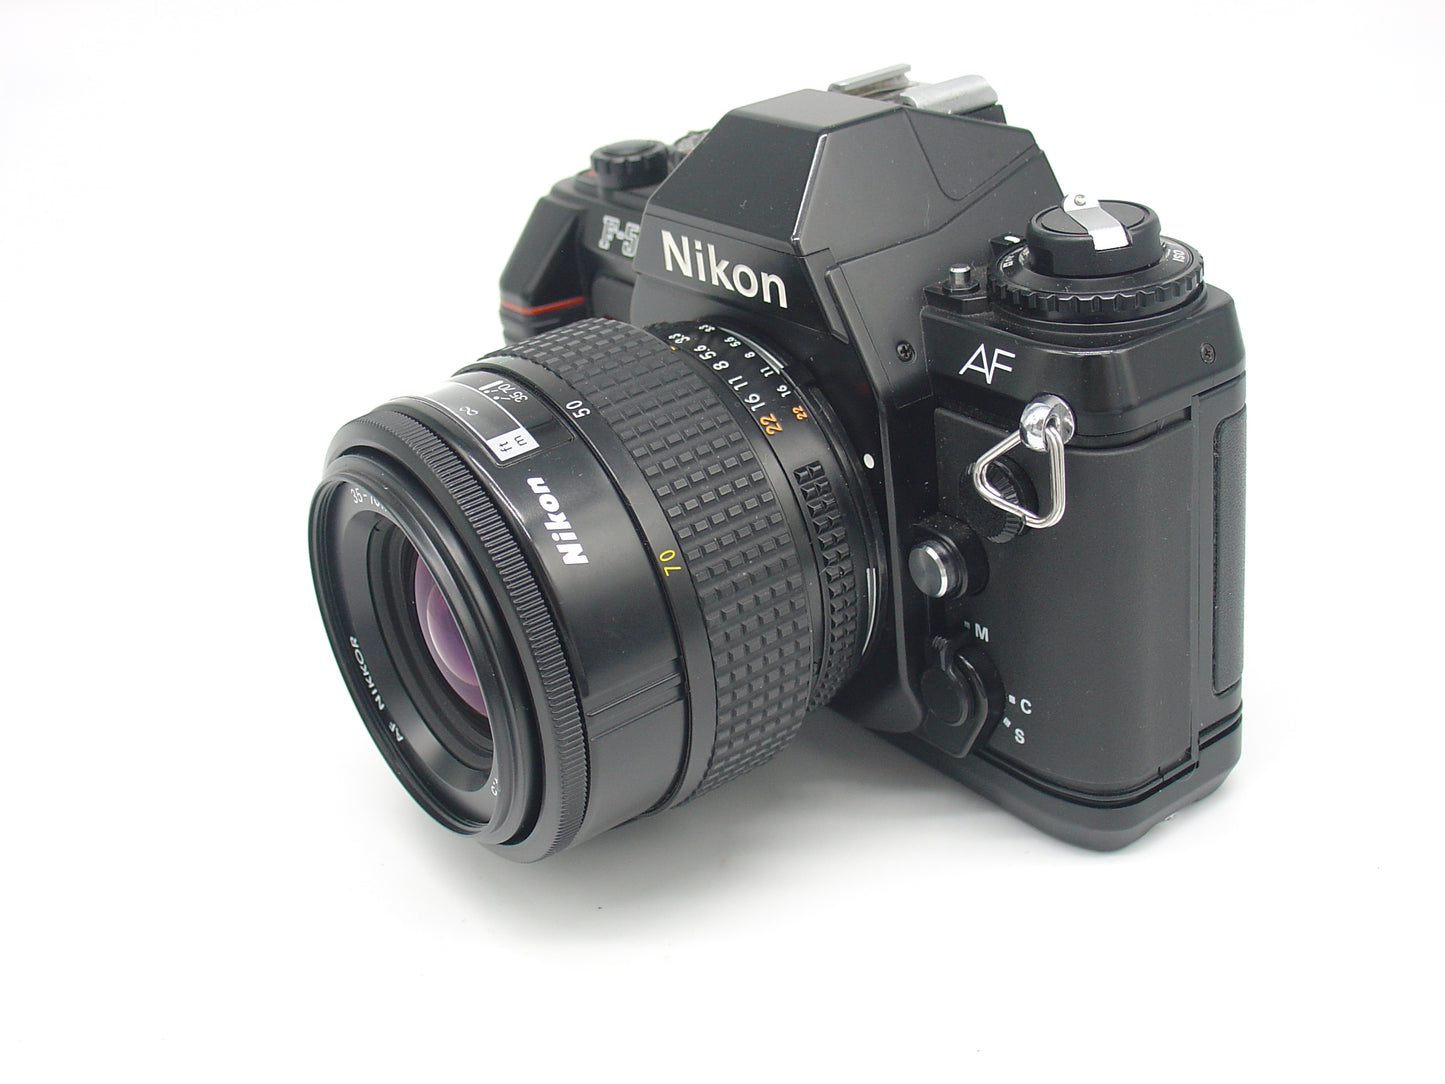 Nikon F-501 SLR film camera with zoom lens